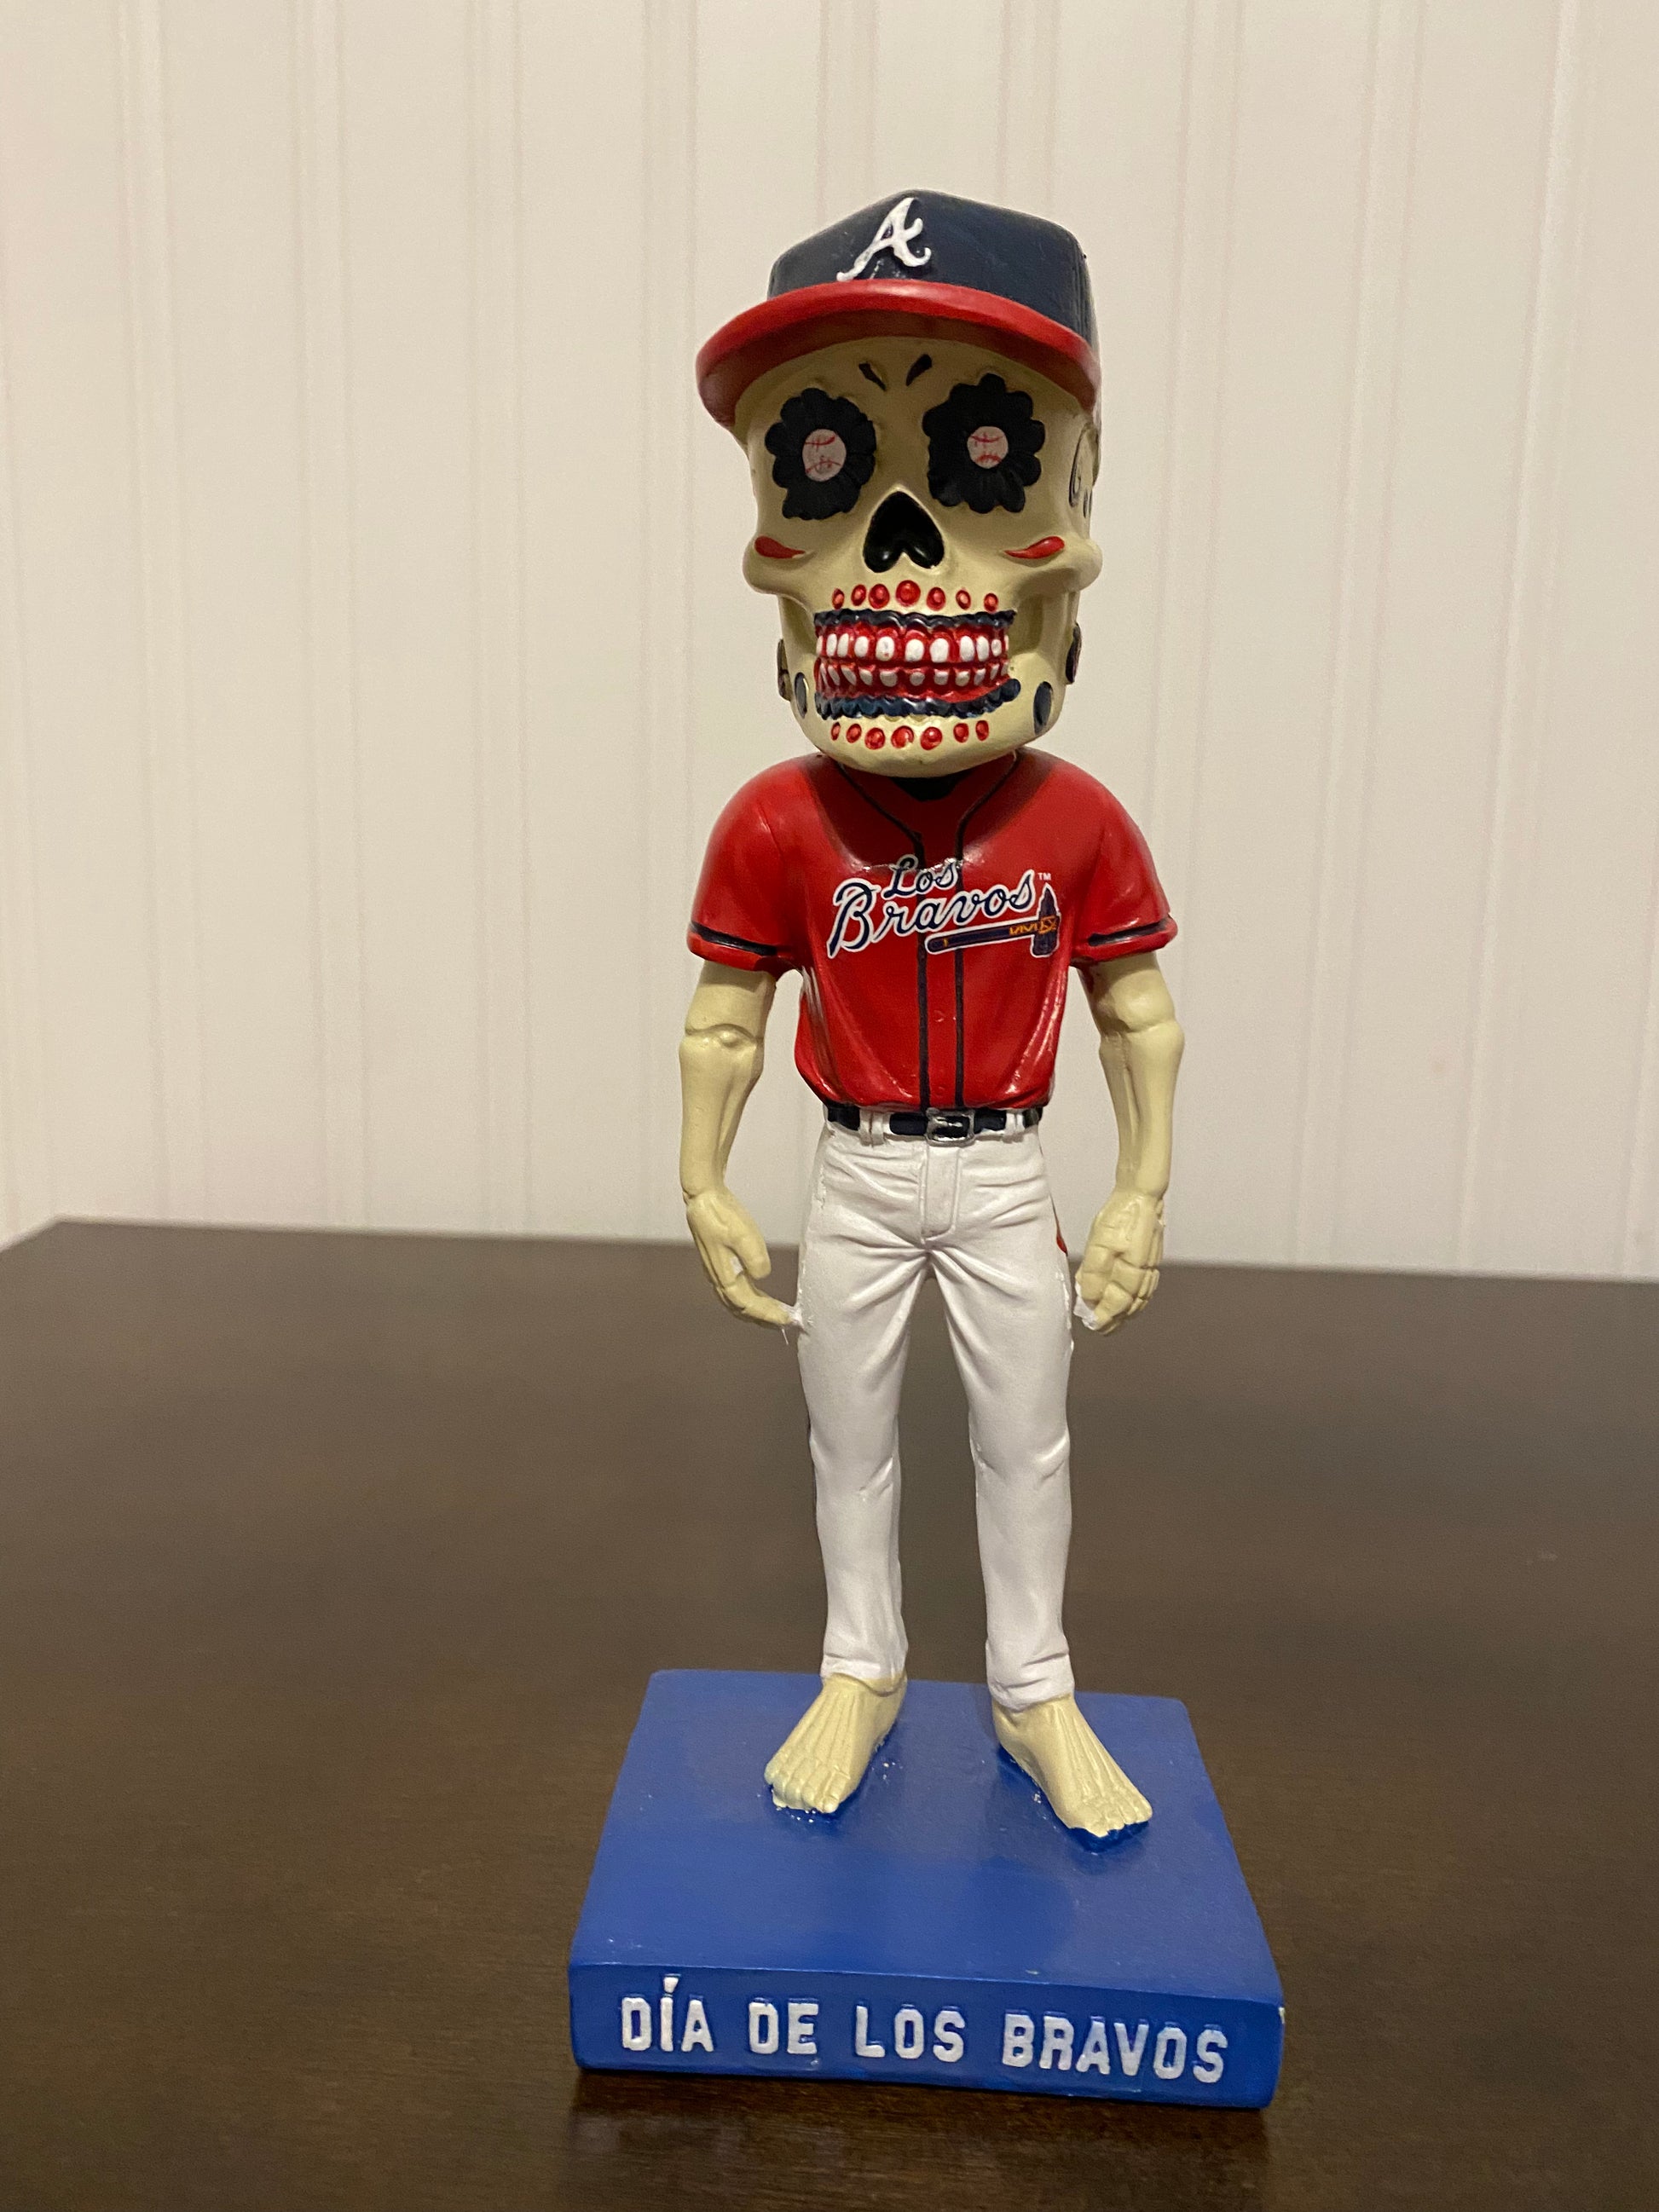 Braves Retail on X: 2019 @LosBravos Sugar Skull tees are now